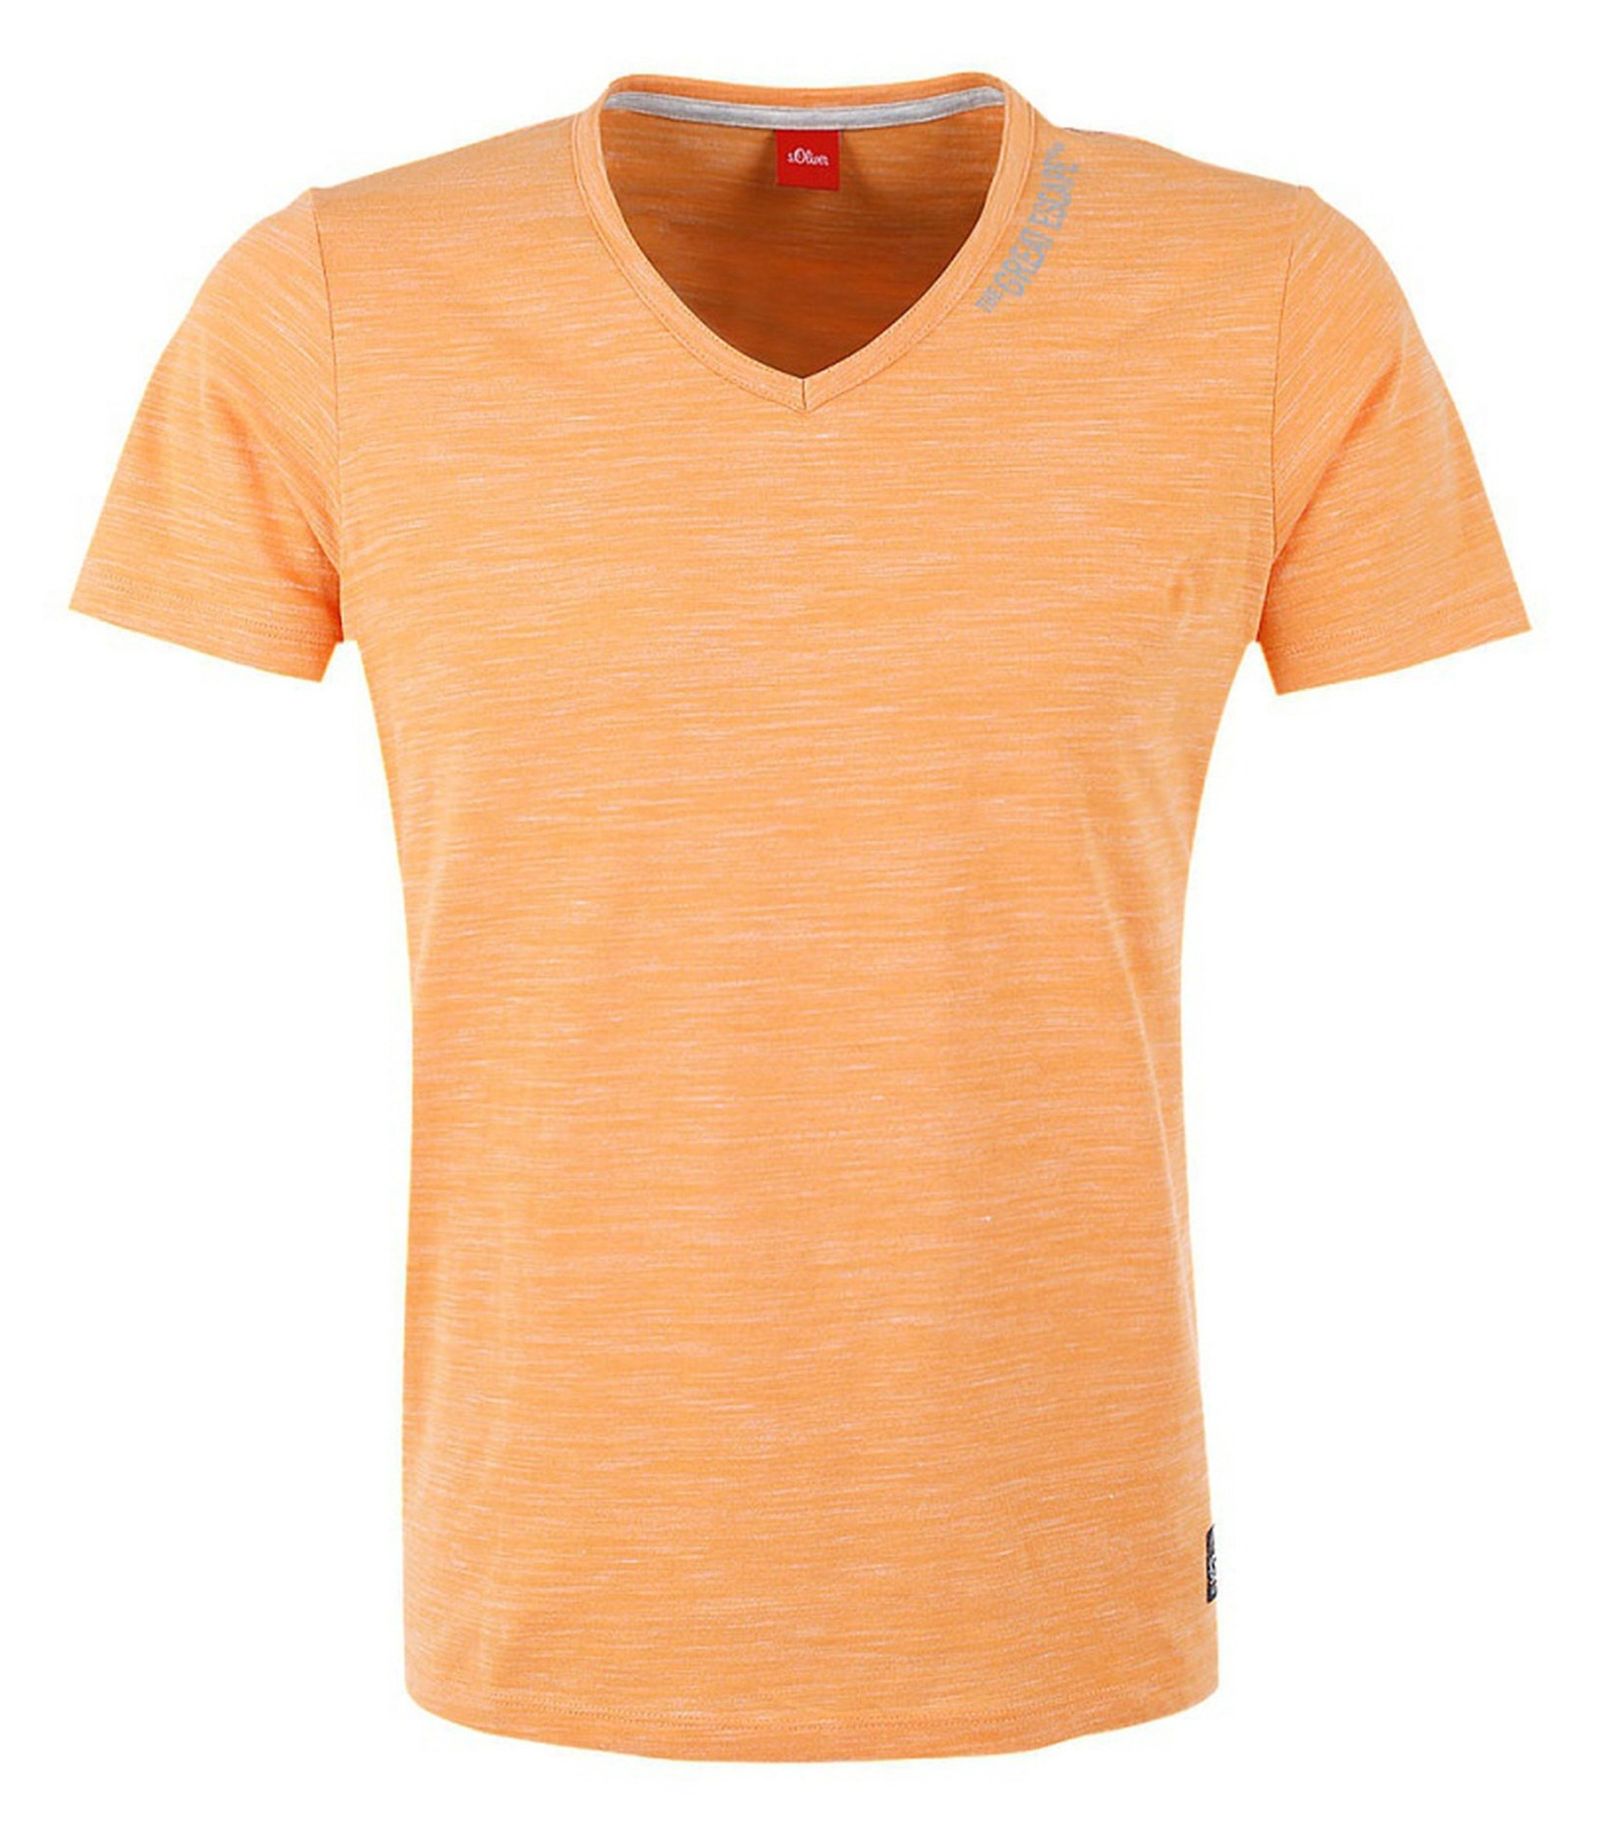 تی شرت نخی یقه هفت مردانه - اس.اولیور - نارنجي روشن - 4